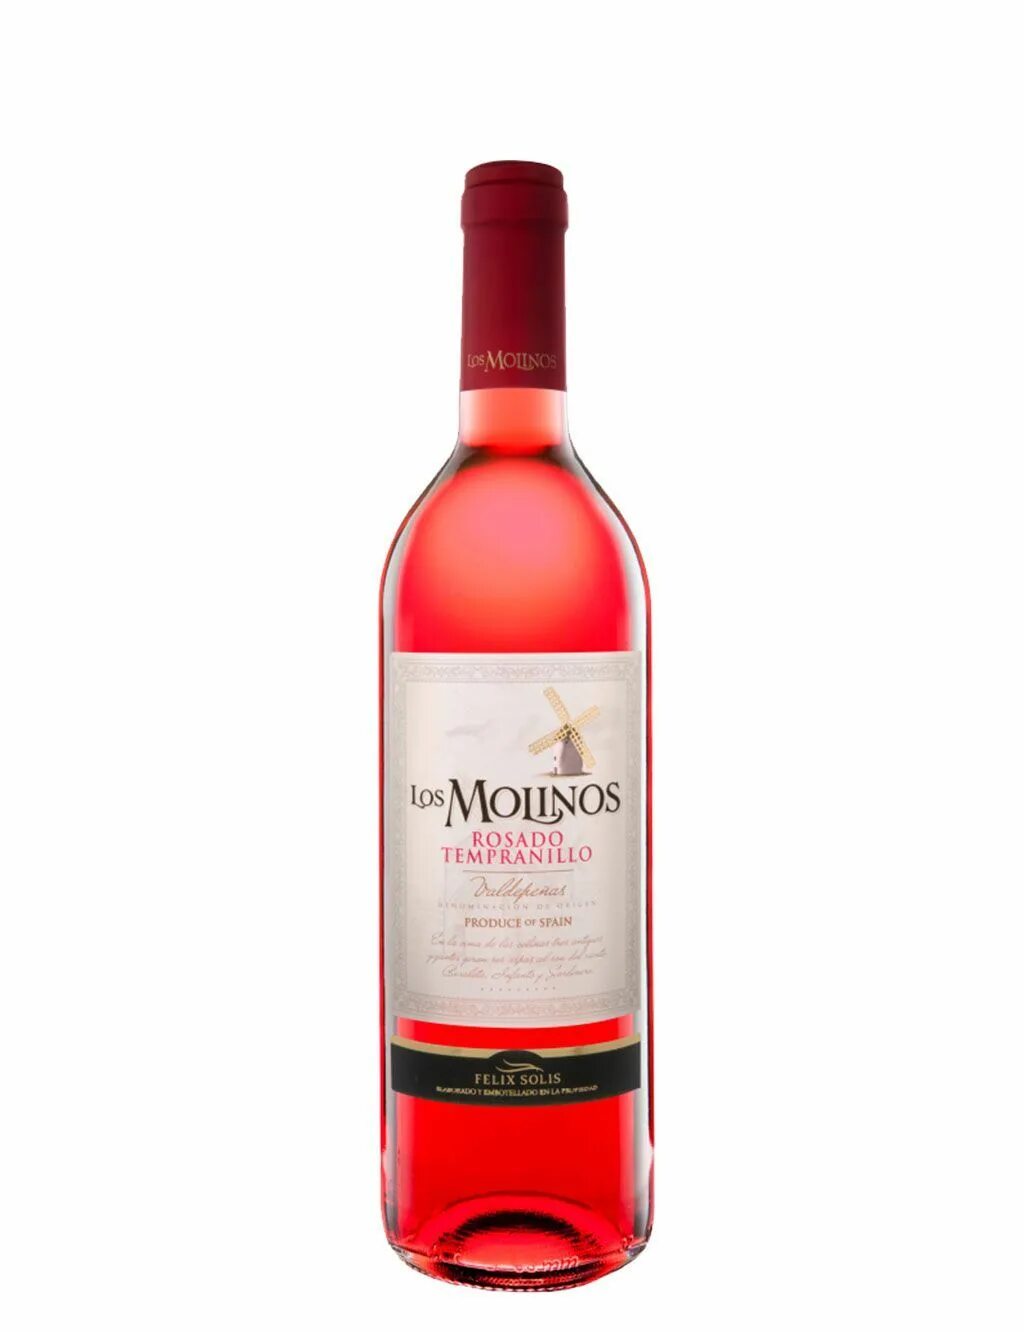 Испанское вино Лос Молинос. Los Molinos Tempranillo вино. Темпранильо вино Испания розовое. Розовые вина испании